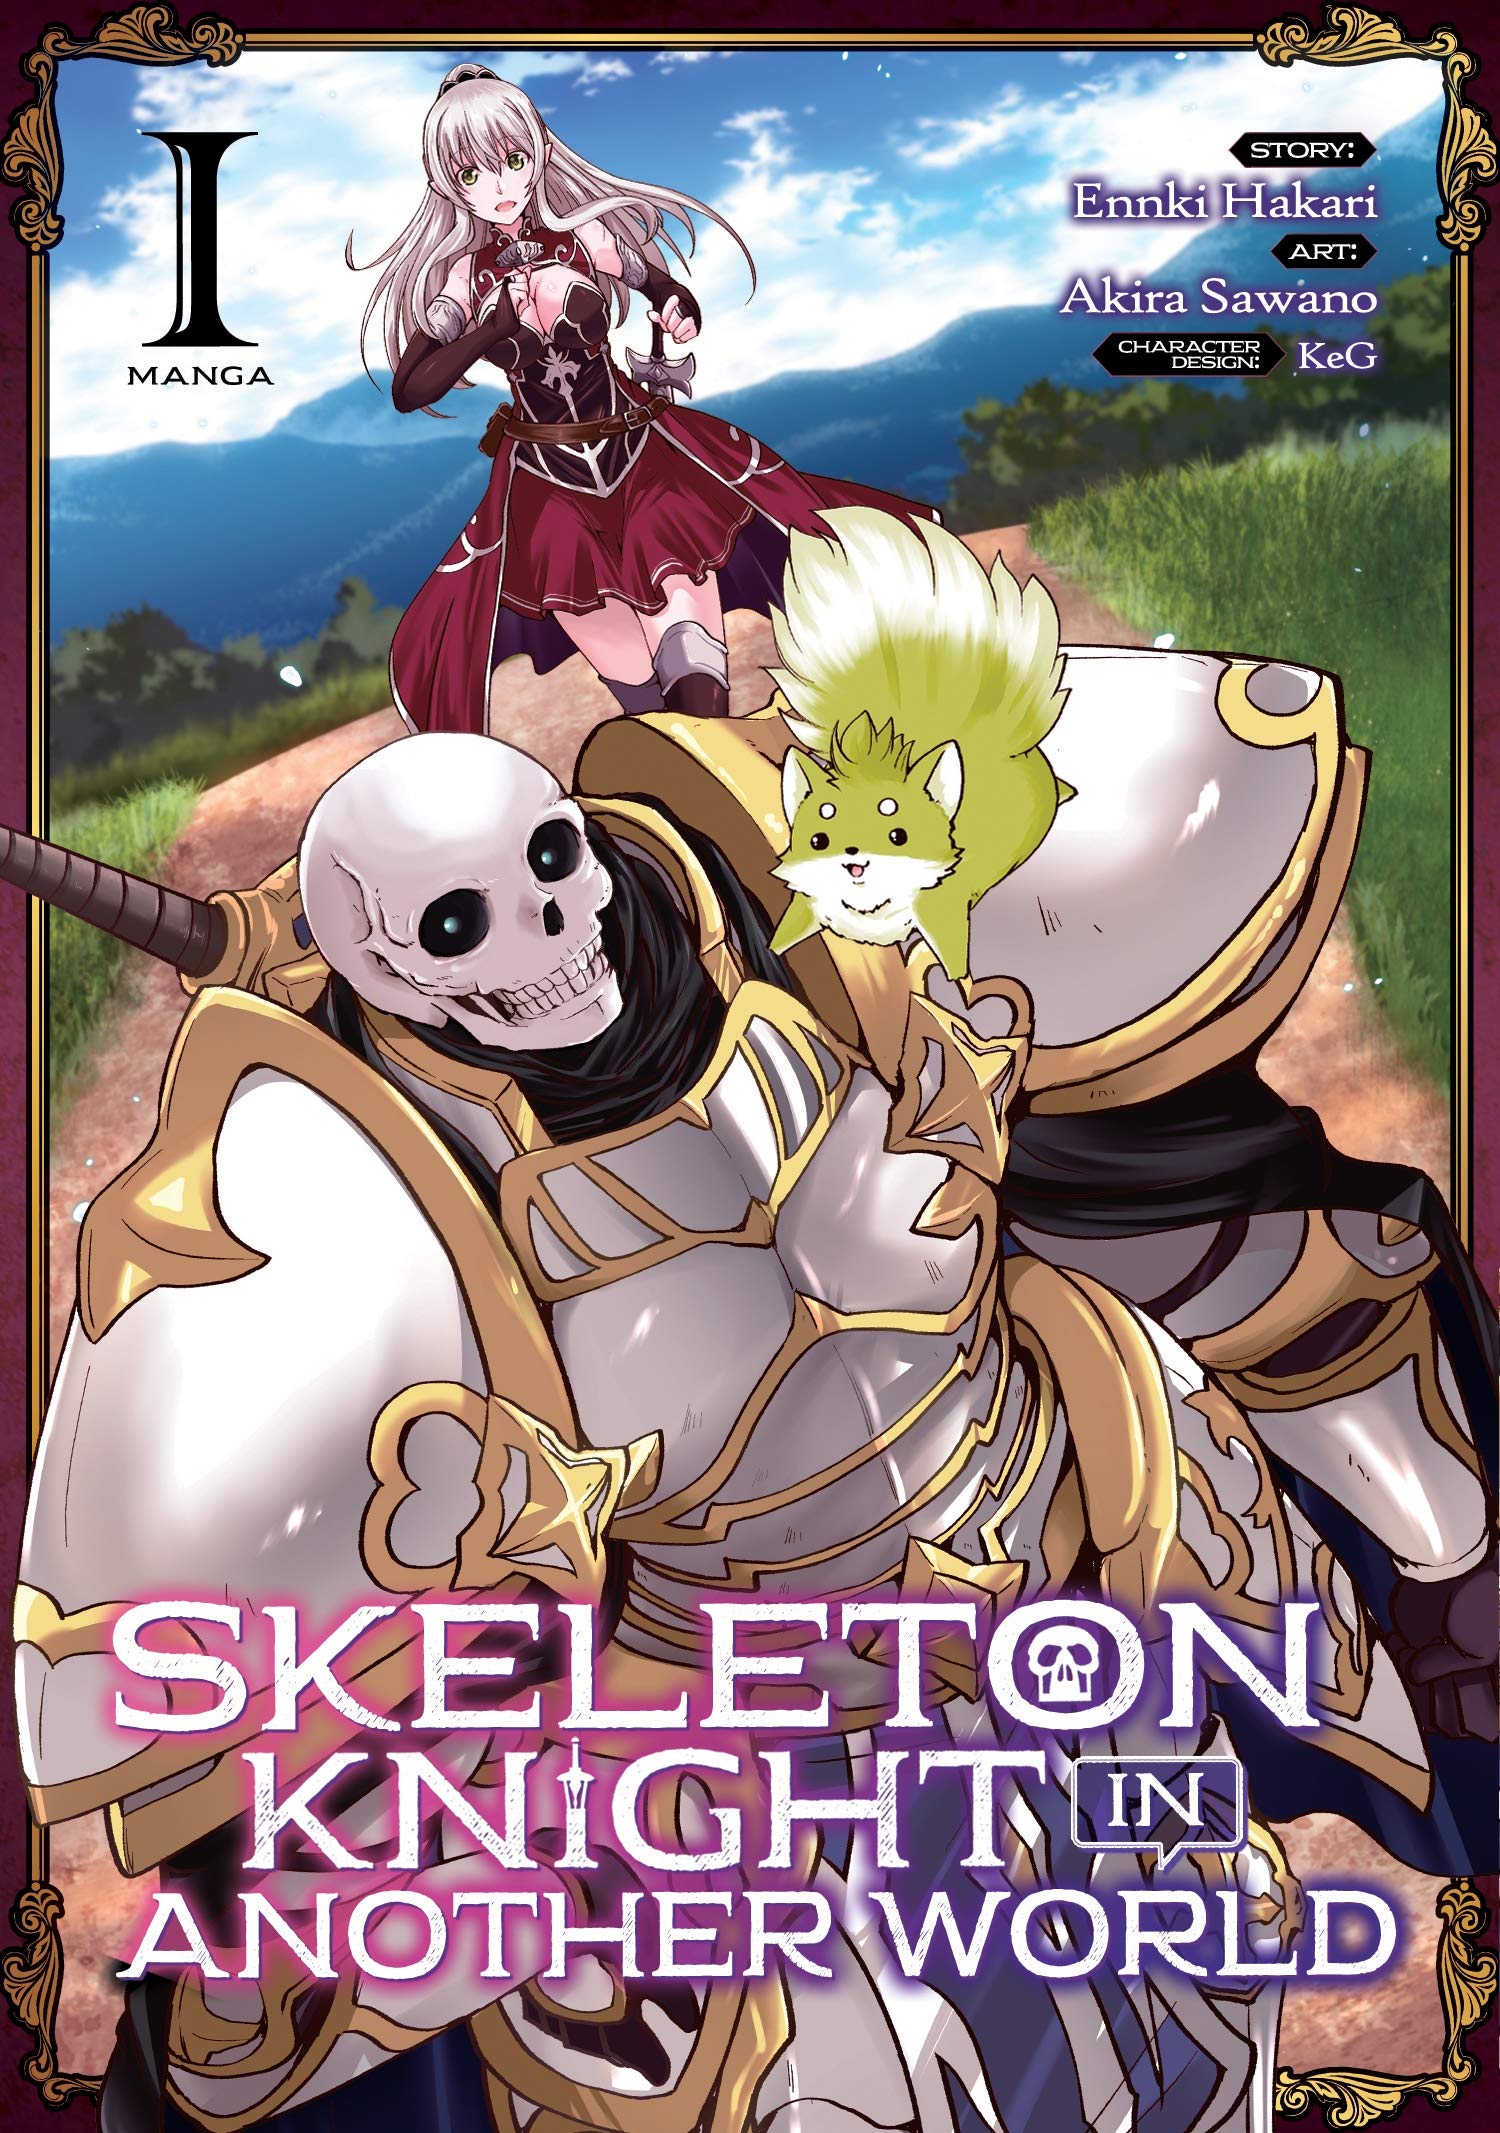 Amazon.com: Skeleton Knight in Another World (Manga) Vol. 1 ...